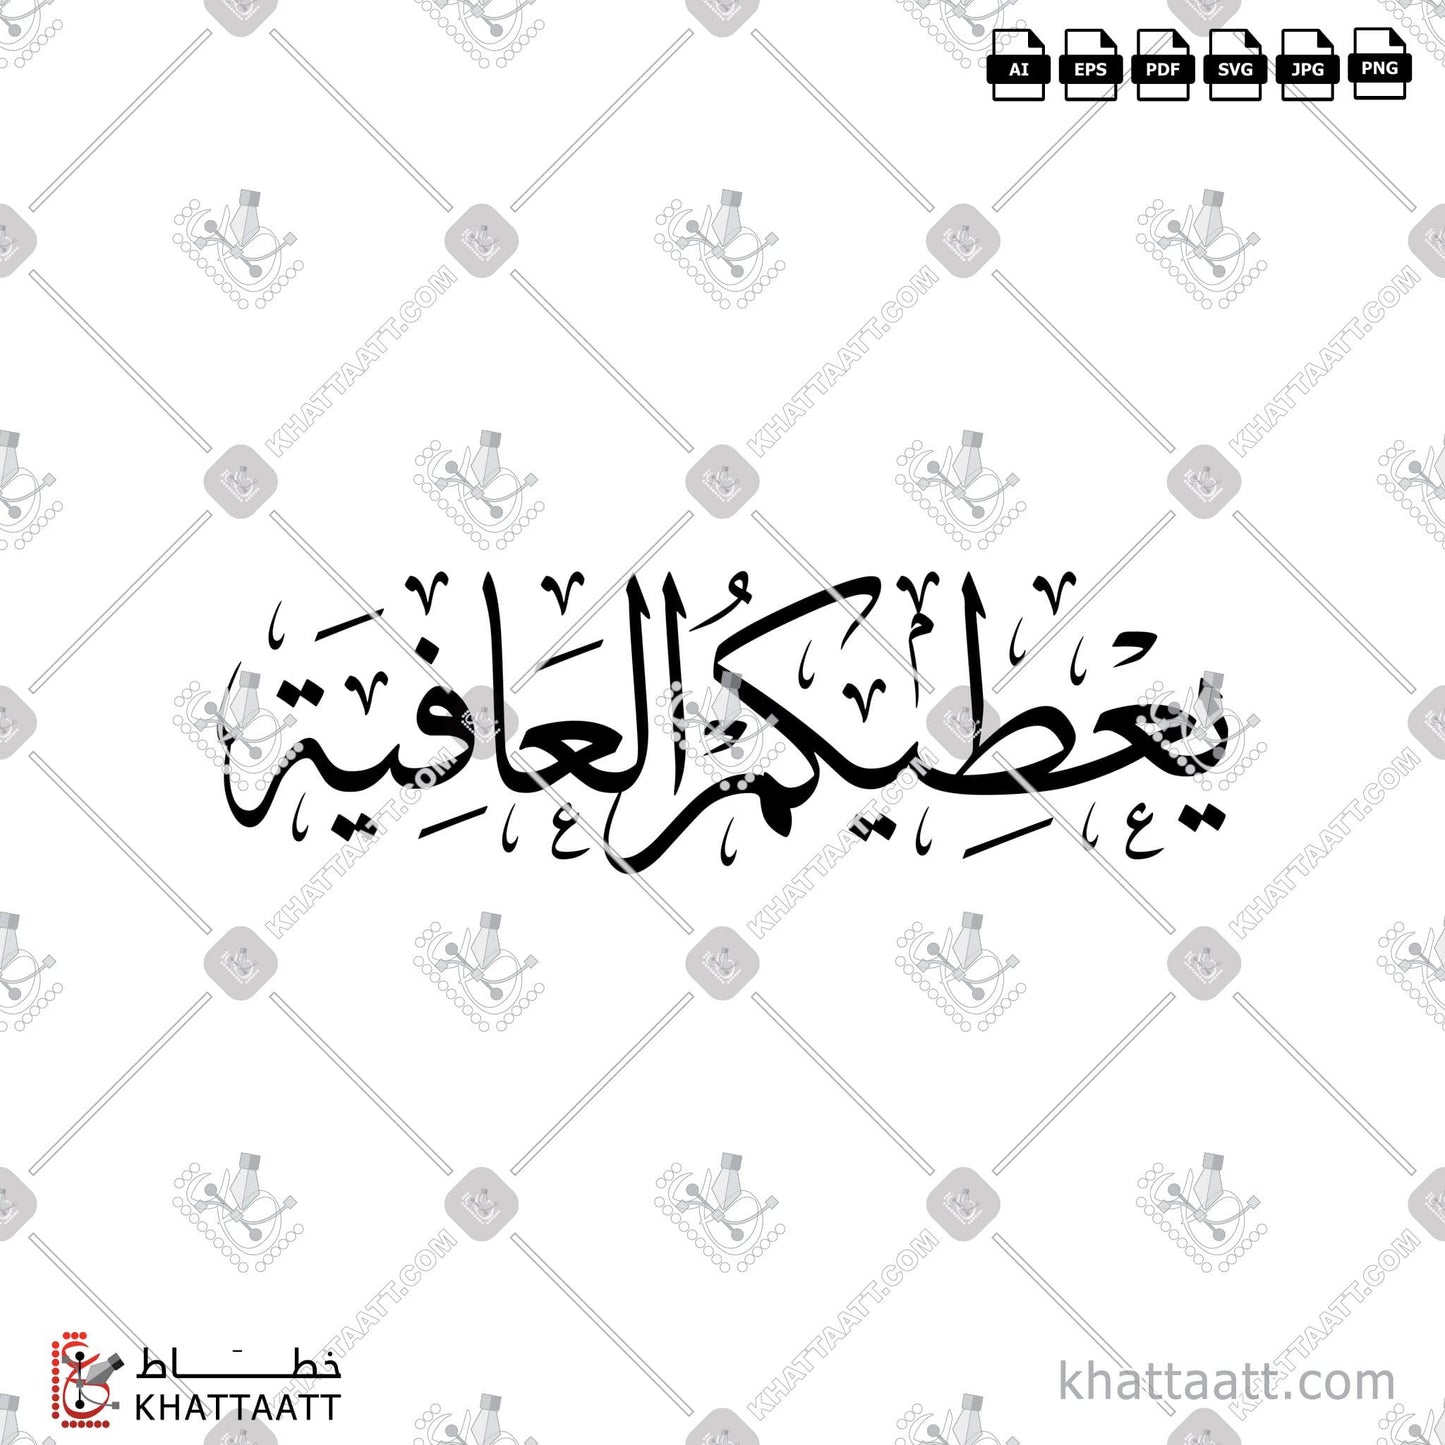 Digital Arabic calligraphy vector of يعطيكم العافية in Thuluth - خط الثلث